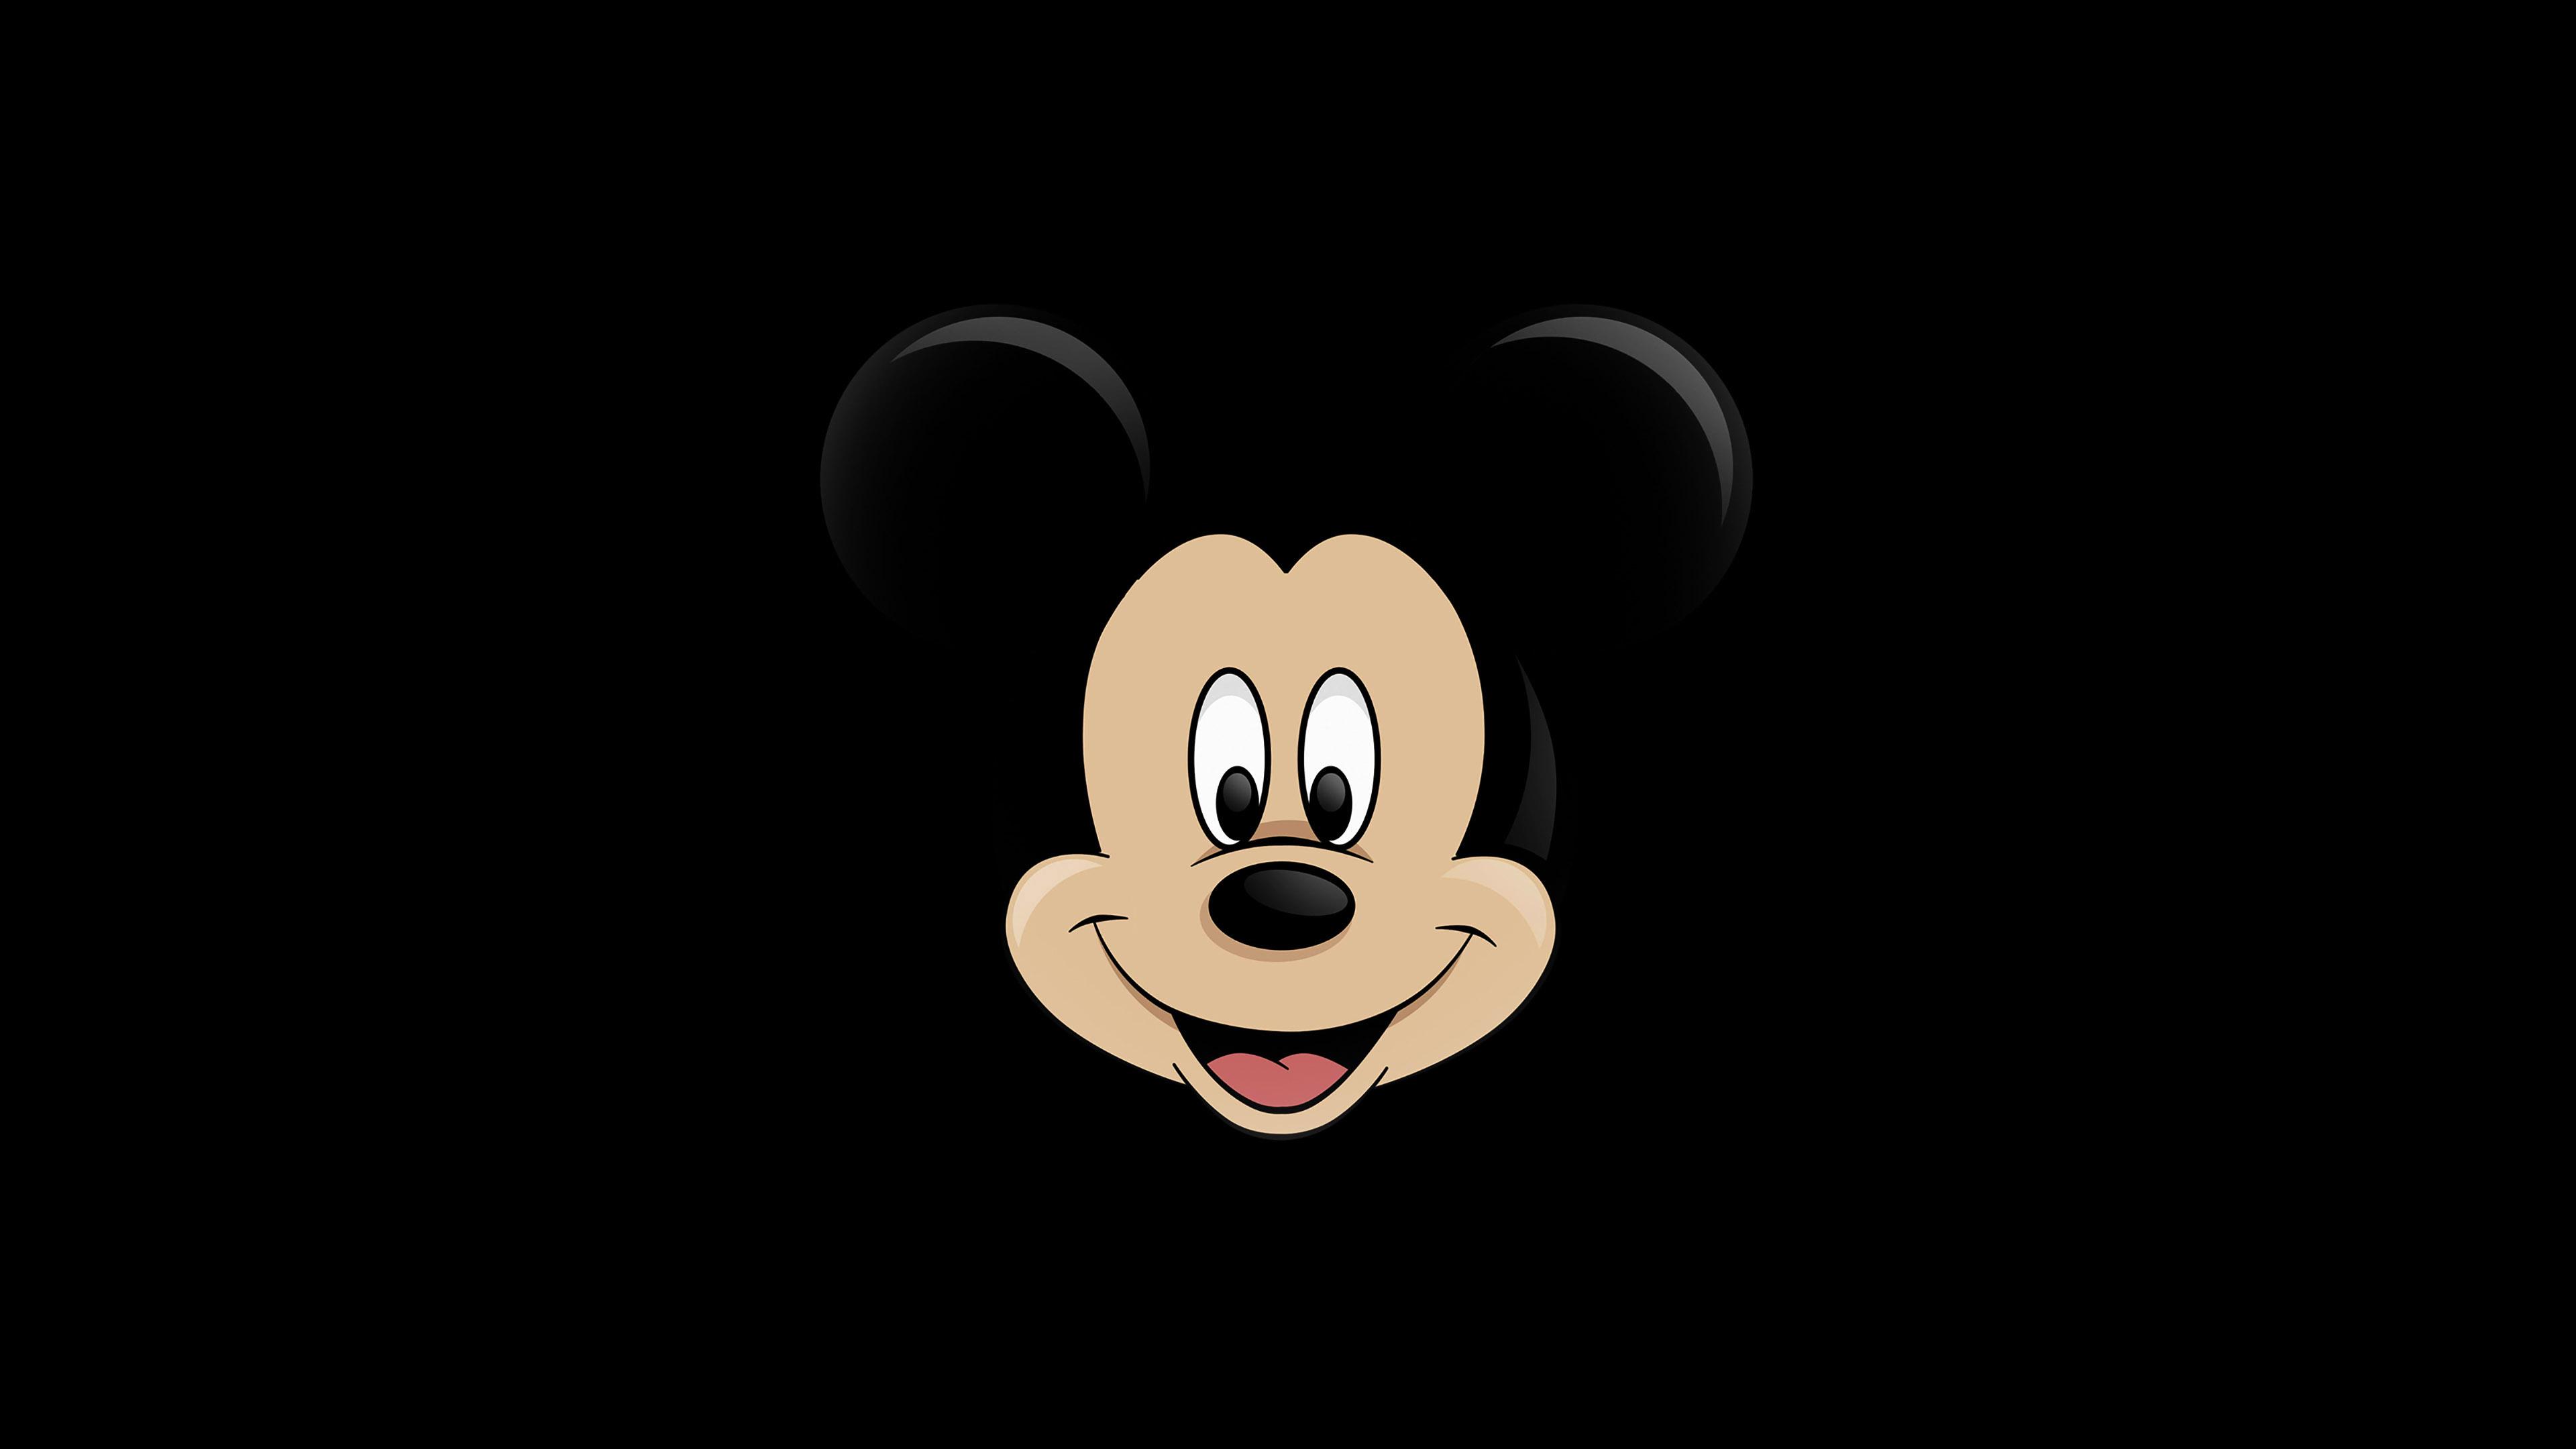 wallpaper for desktop, laptop. mickey mouse dark logo